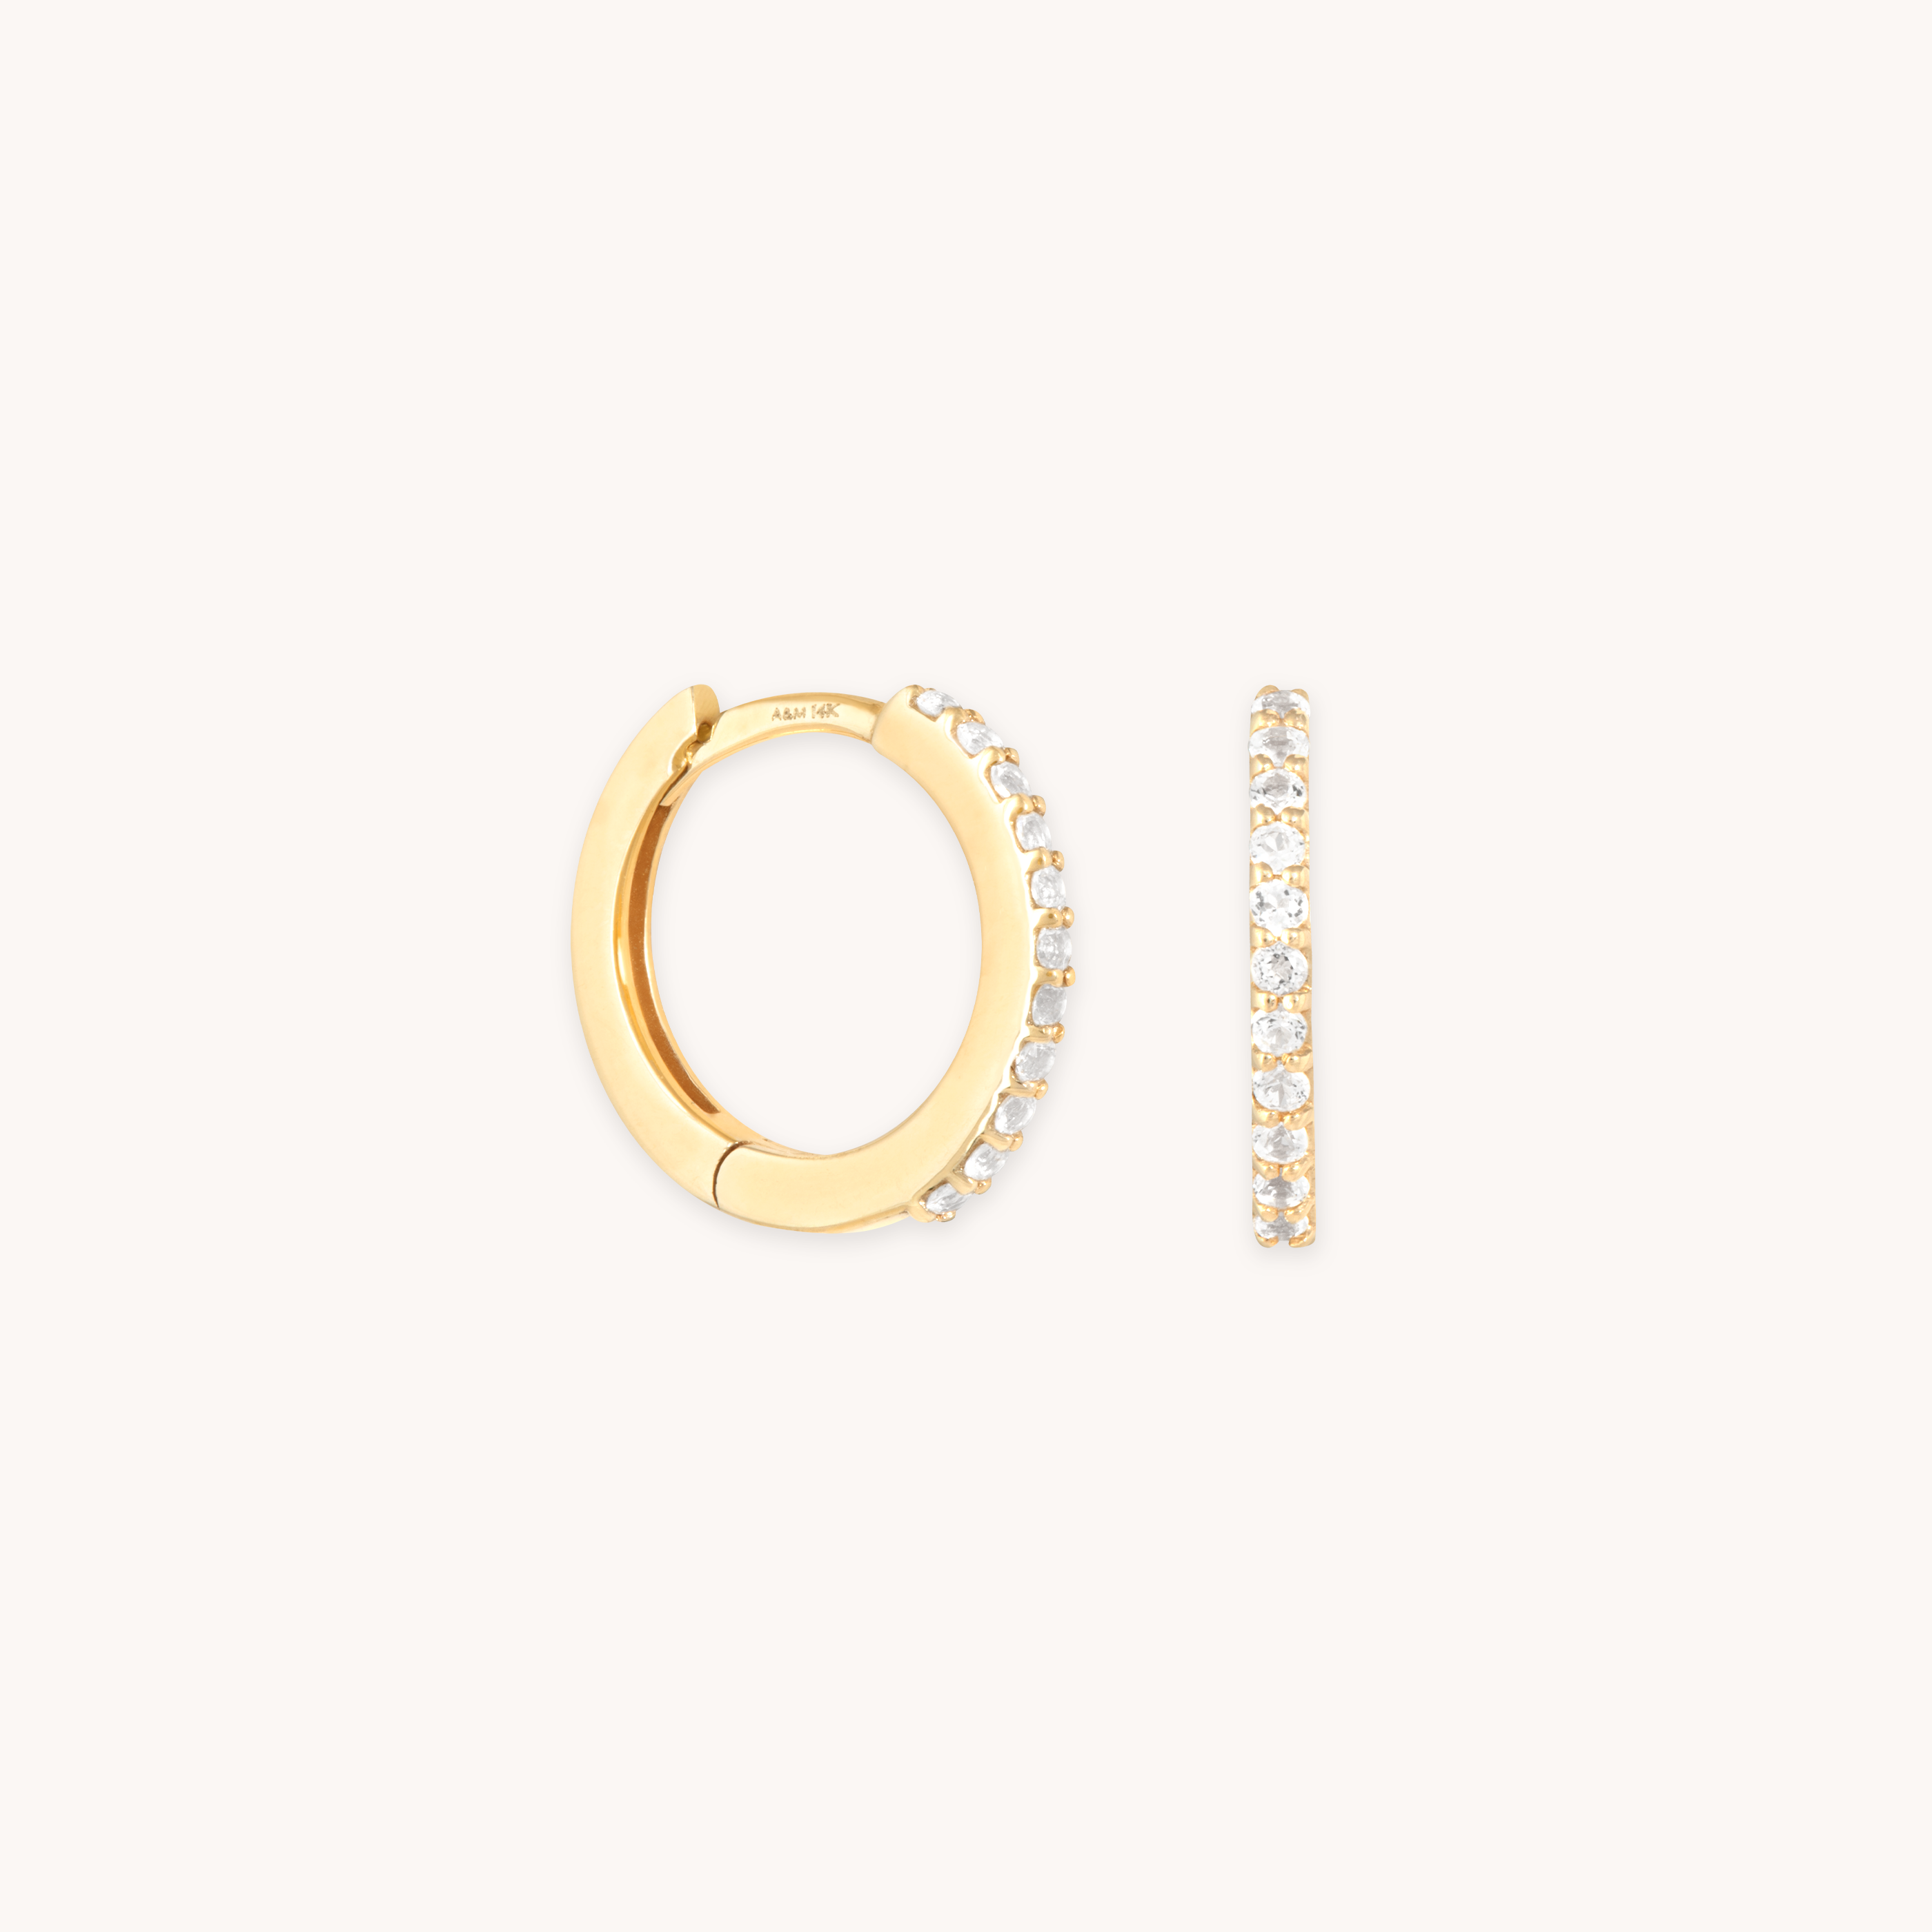 Solid Gold Topaz Hoops | Astrid & Miyu Earrings